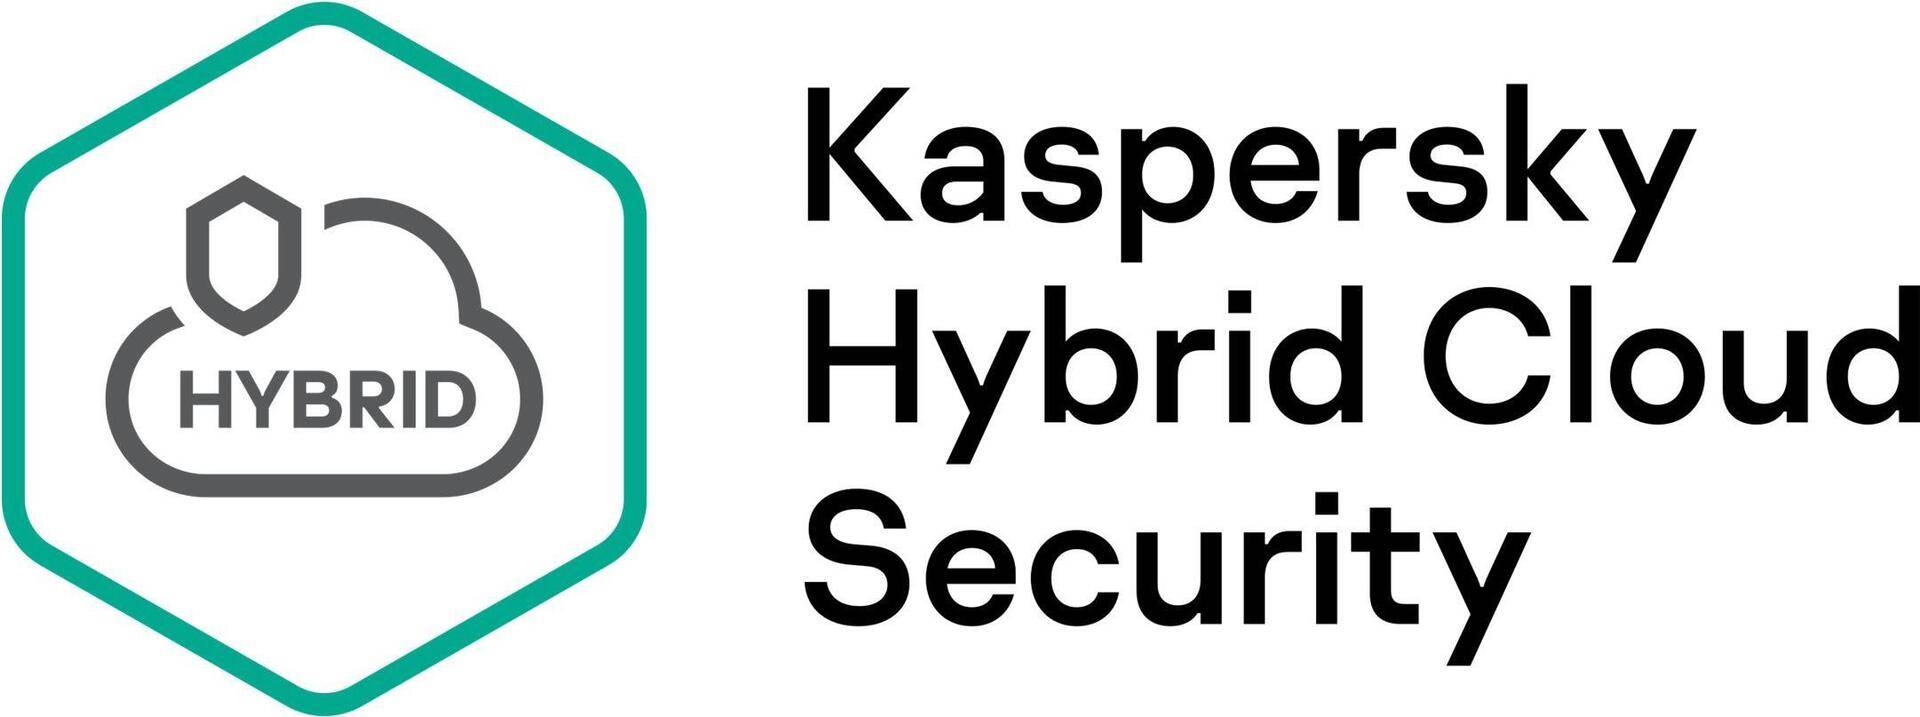 Kaspersky Hybrid Cloud Security Enterprise CPU European Edi. 4 - CPU 1-Year Renewal License (KL4553XADFR) von Kaspersky Lab